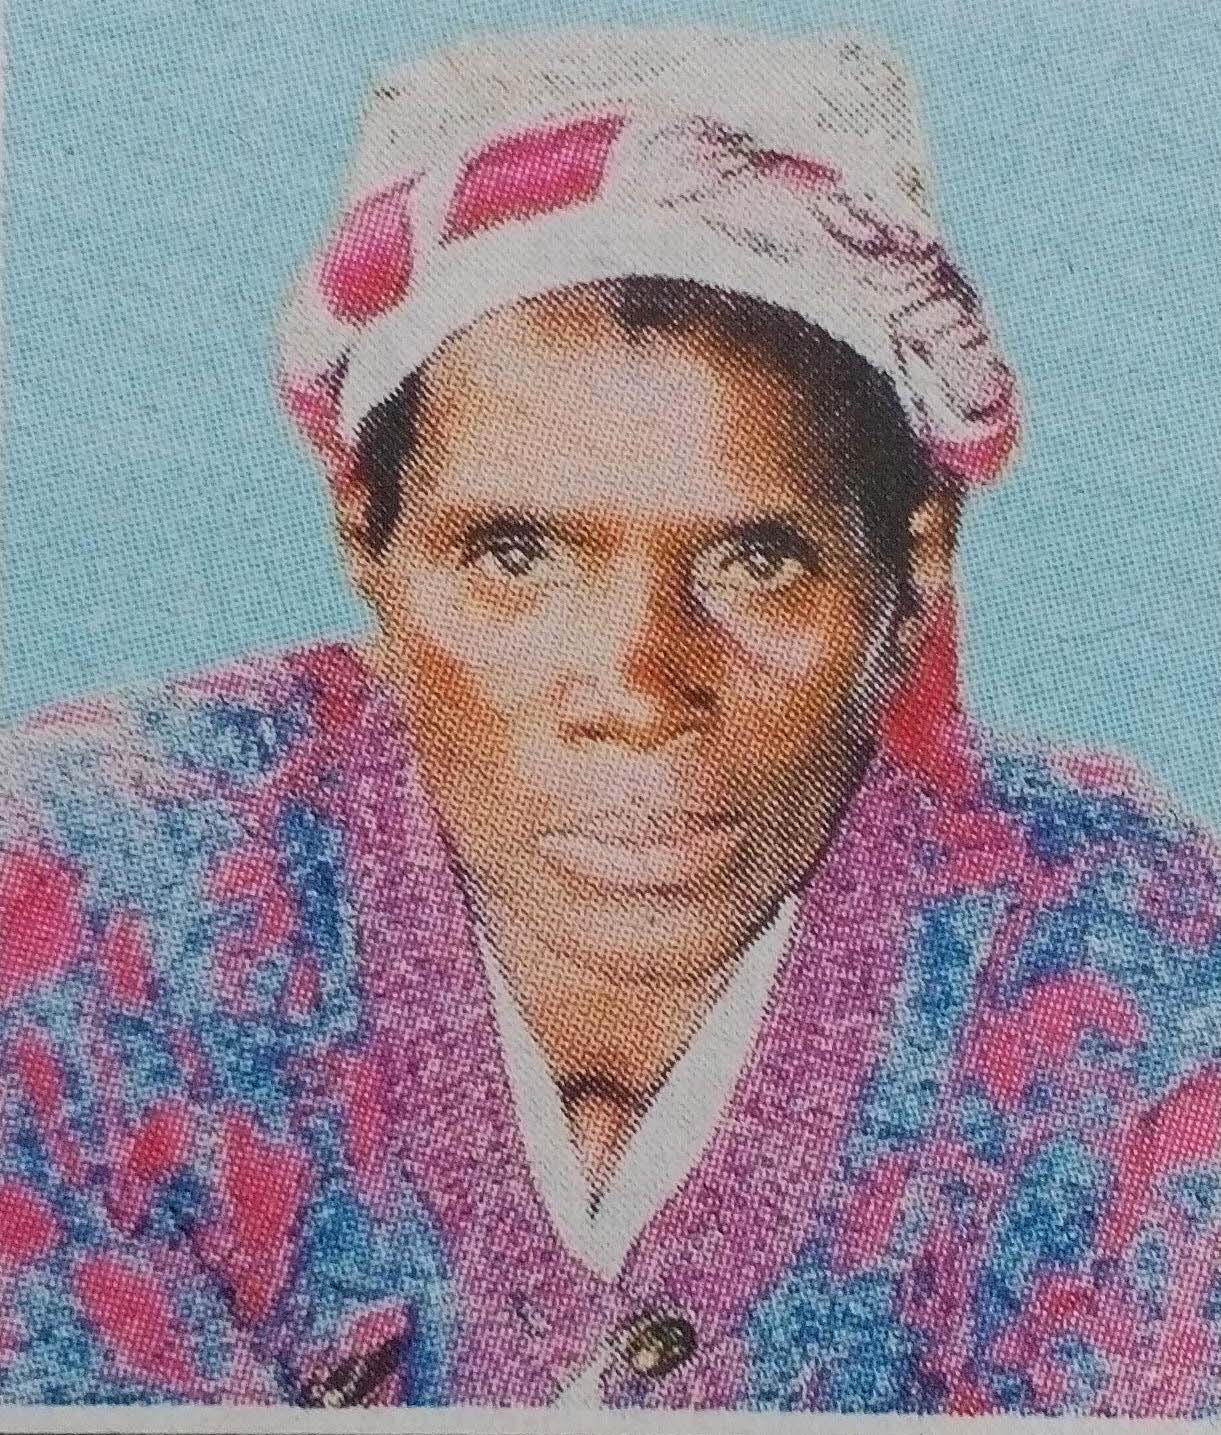 Obituary Image of Mama Maria Teresa Kemunto Mose